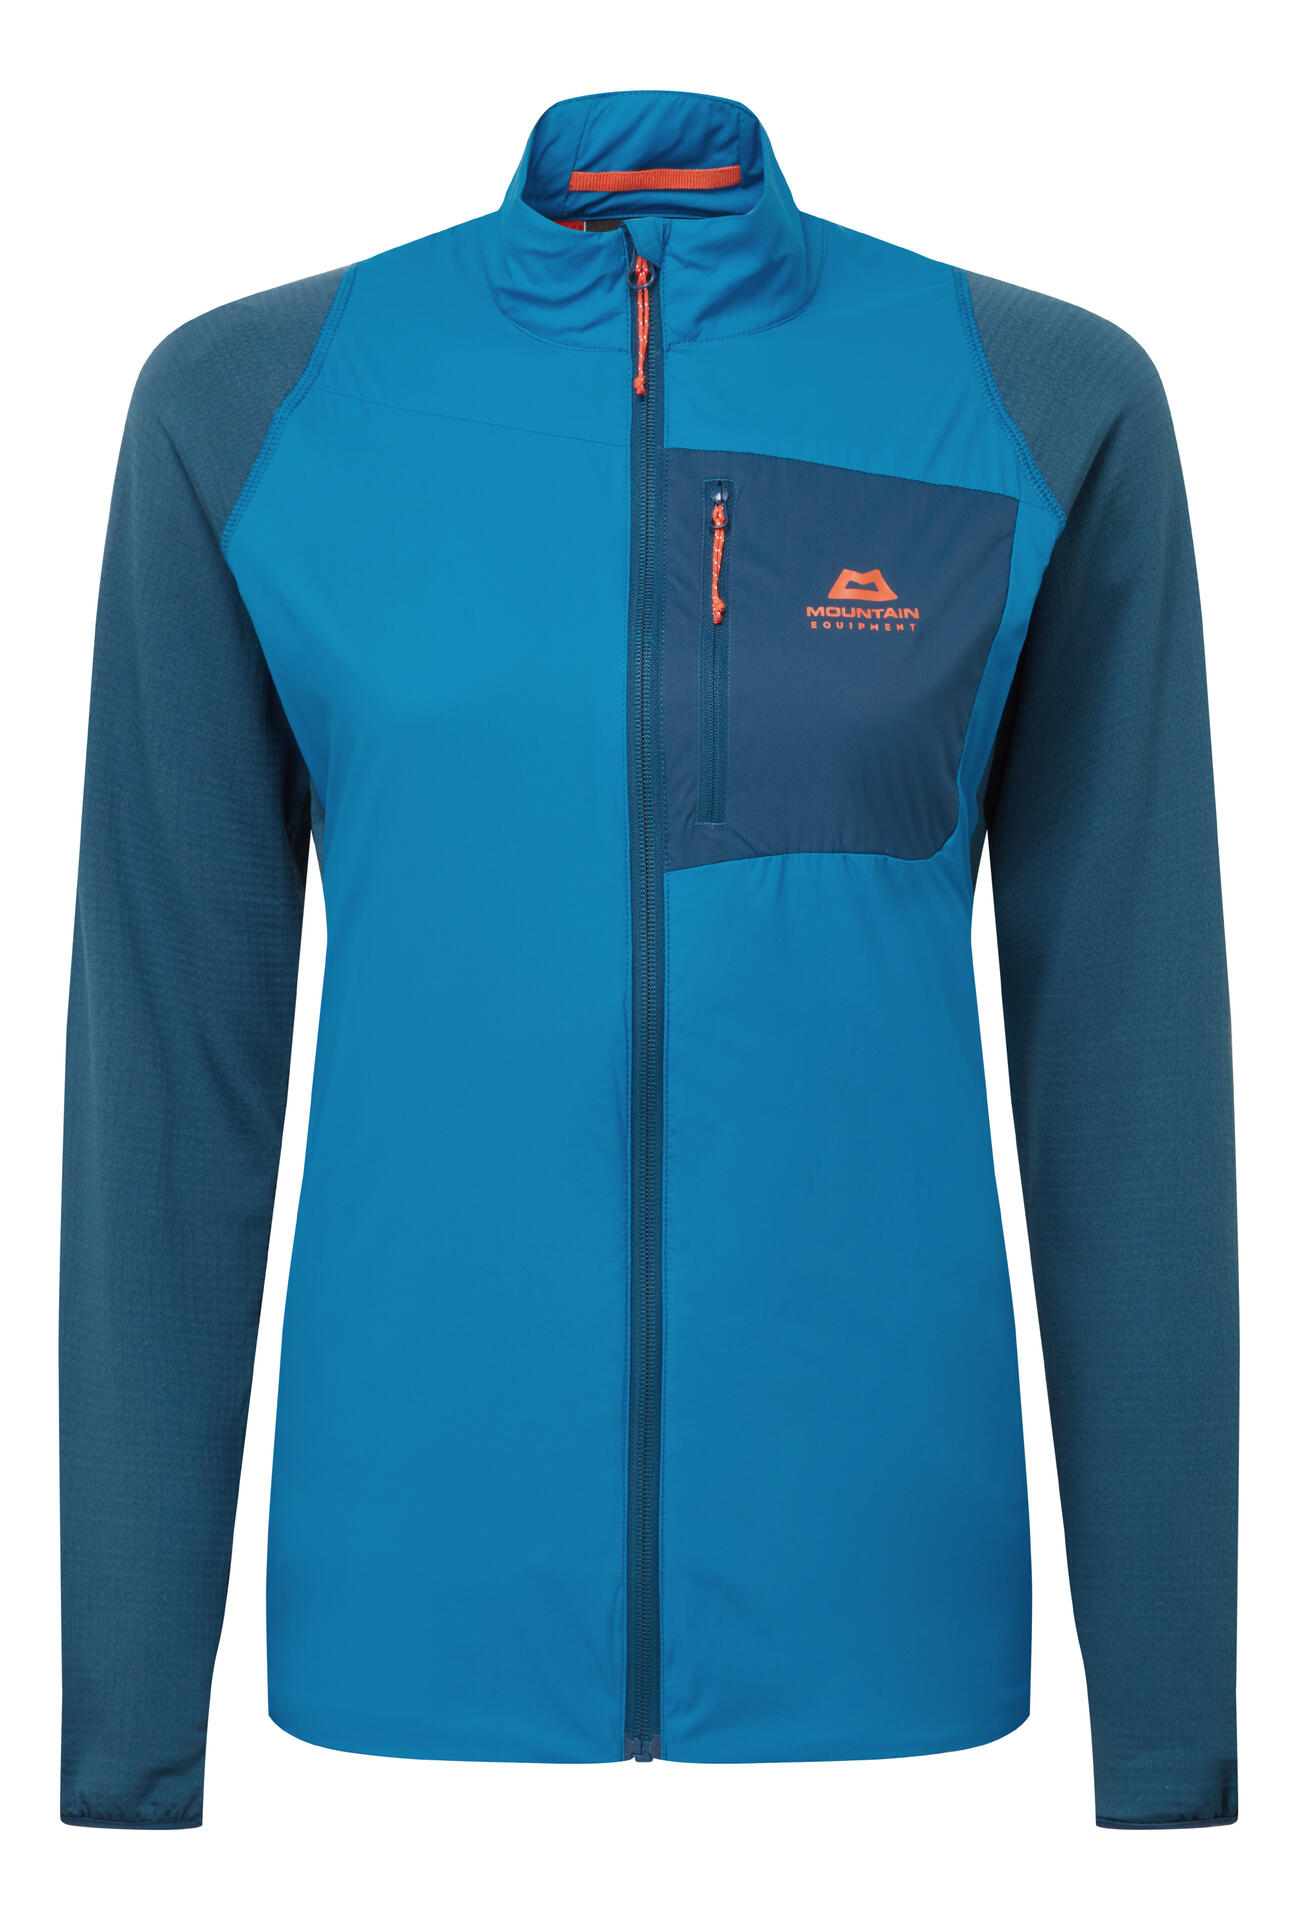 Mountain Equipment Switch Jacket Women'S Barva: Mykonos/Majolica, Velikost: XS